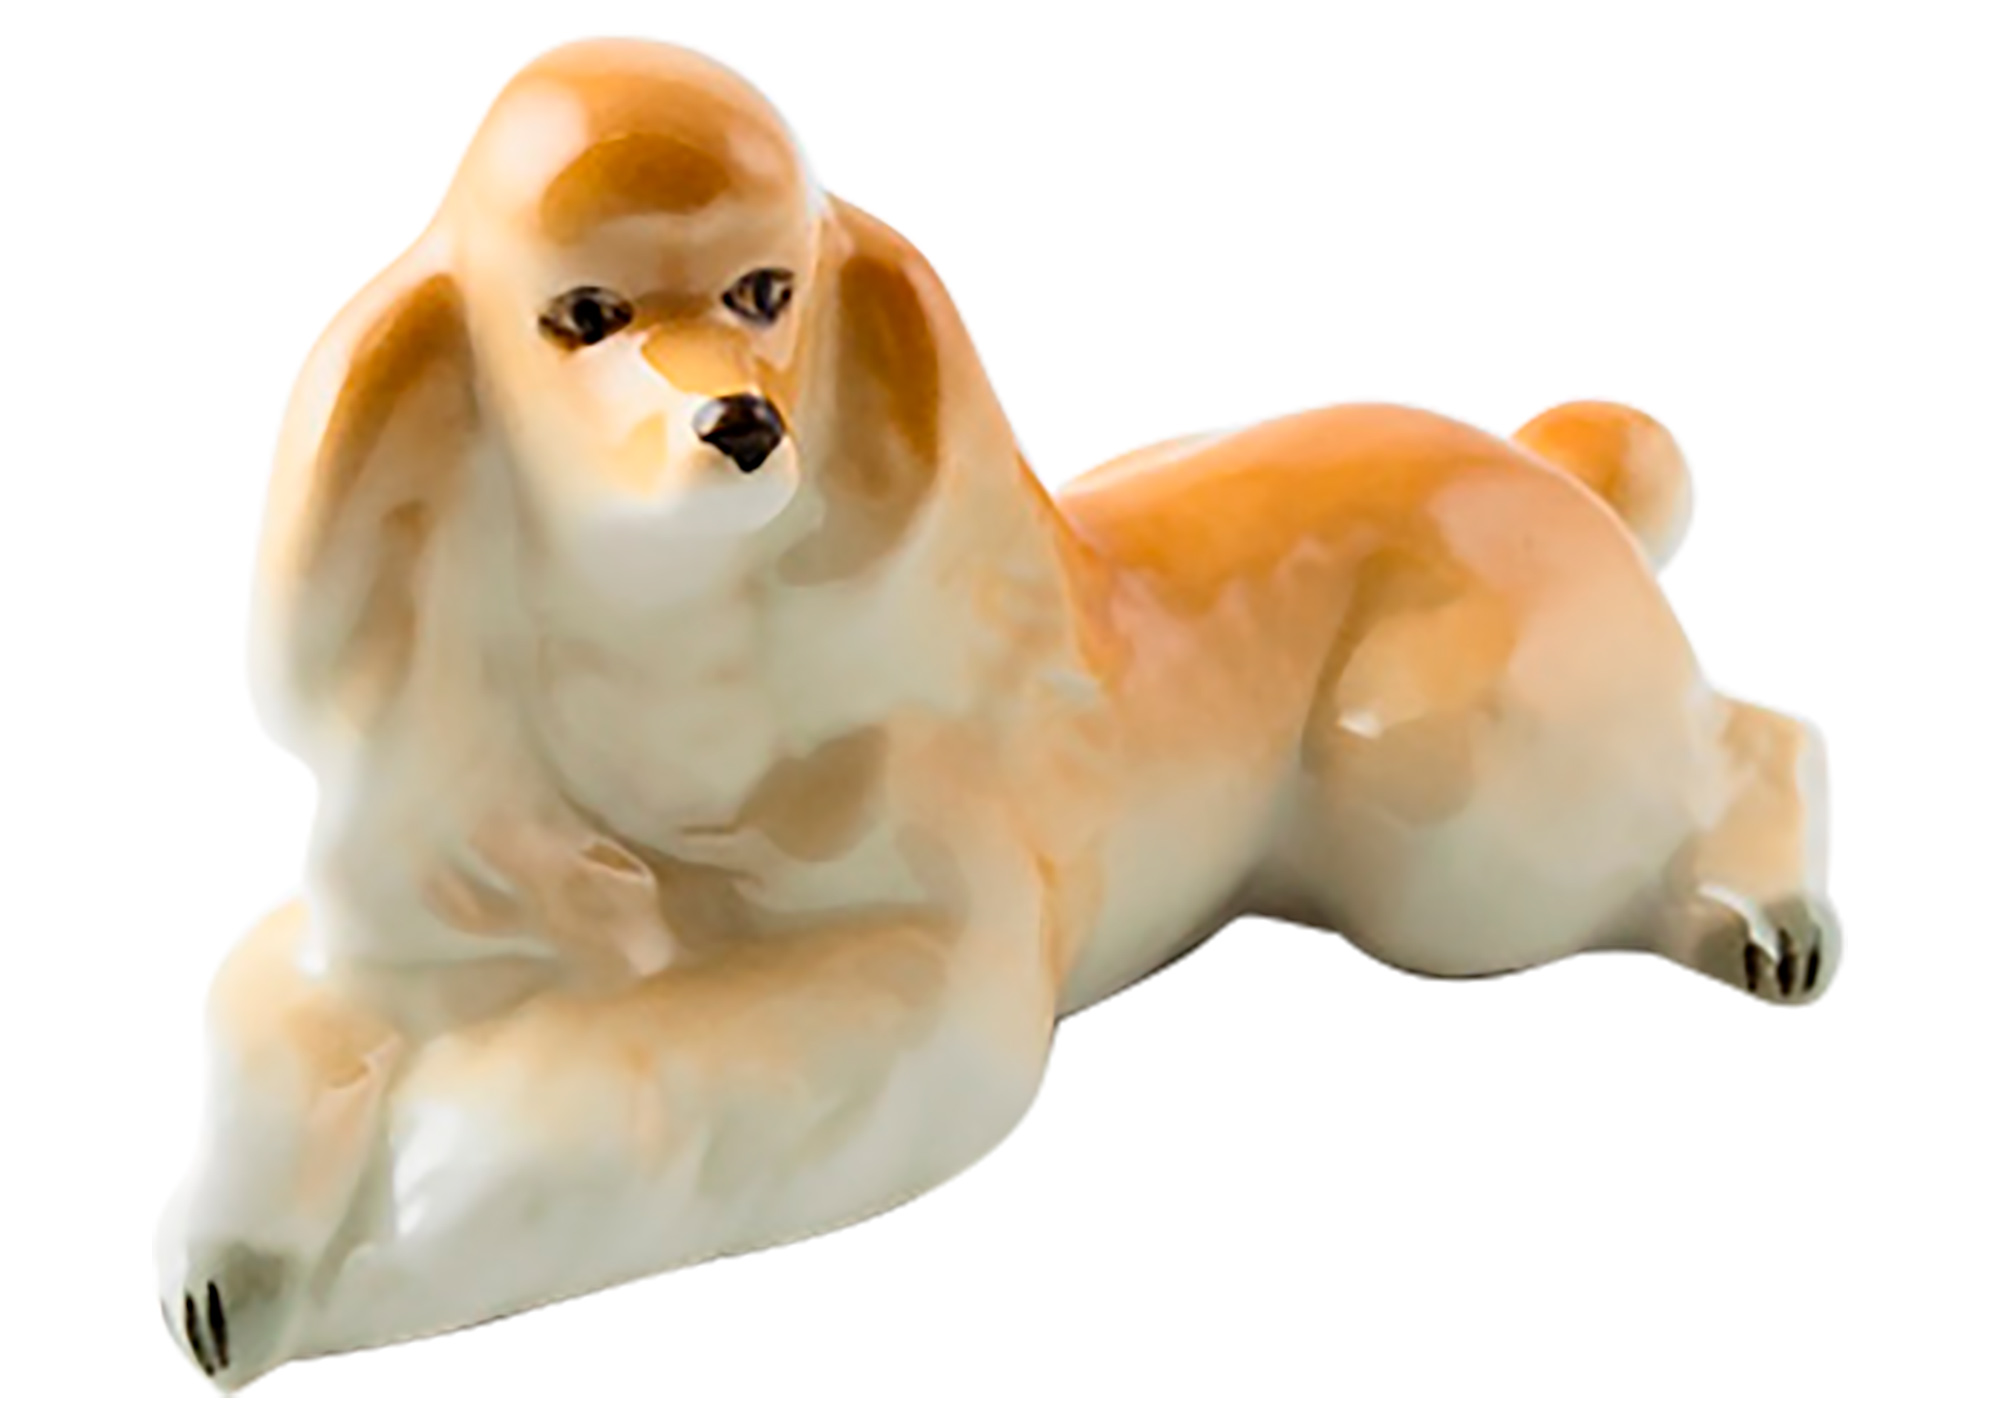 Buy Lying Apricot Poodle Figurine at GoldenCockerel.com